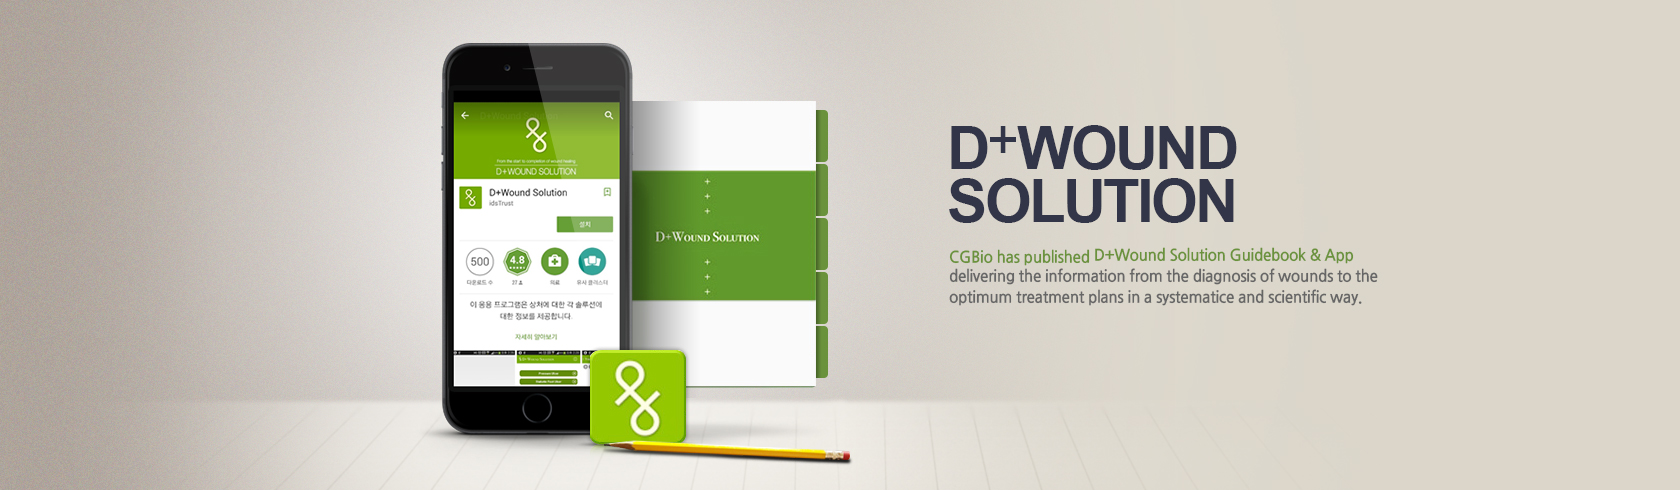 D+Wound Solution. 상처의 정확한 진단과 최적의 치료법에 관한 학술적이고 체계적인 정보를 담은 CGBio D+Wound Solution 가이드북이 출간되었습니다.